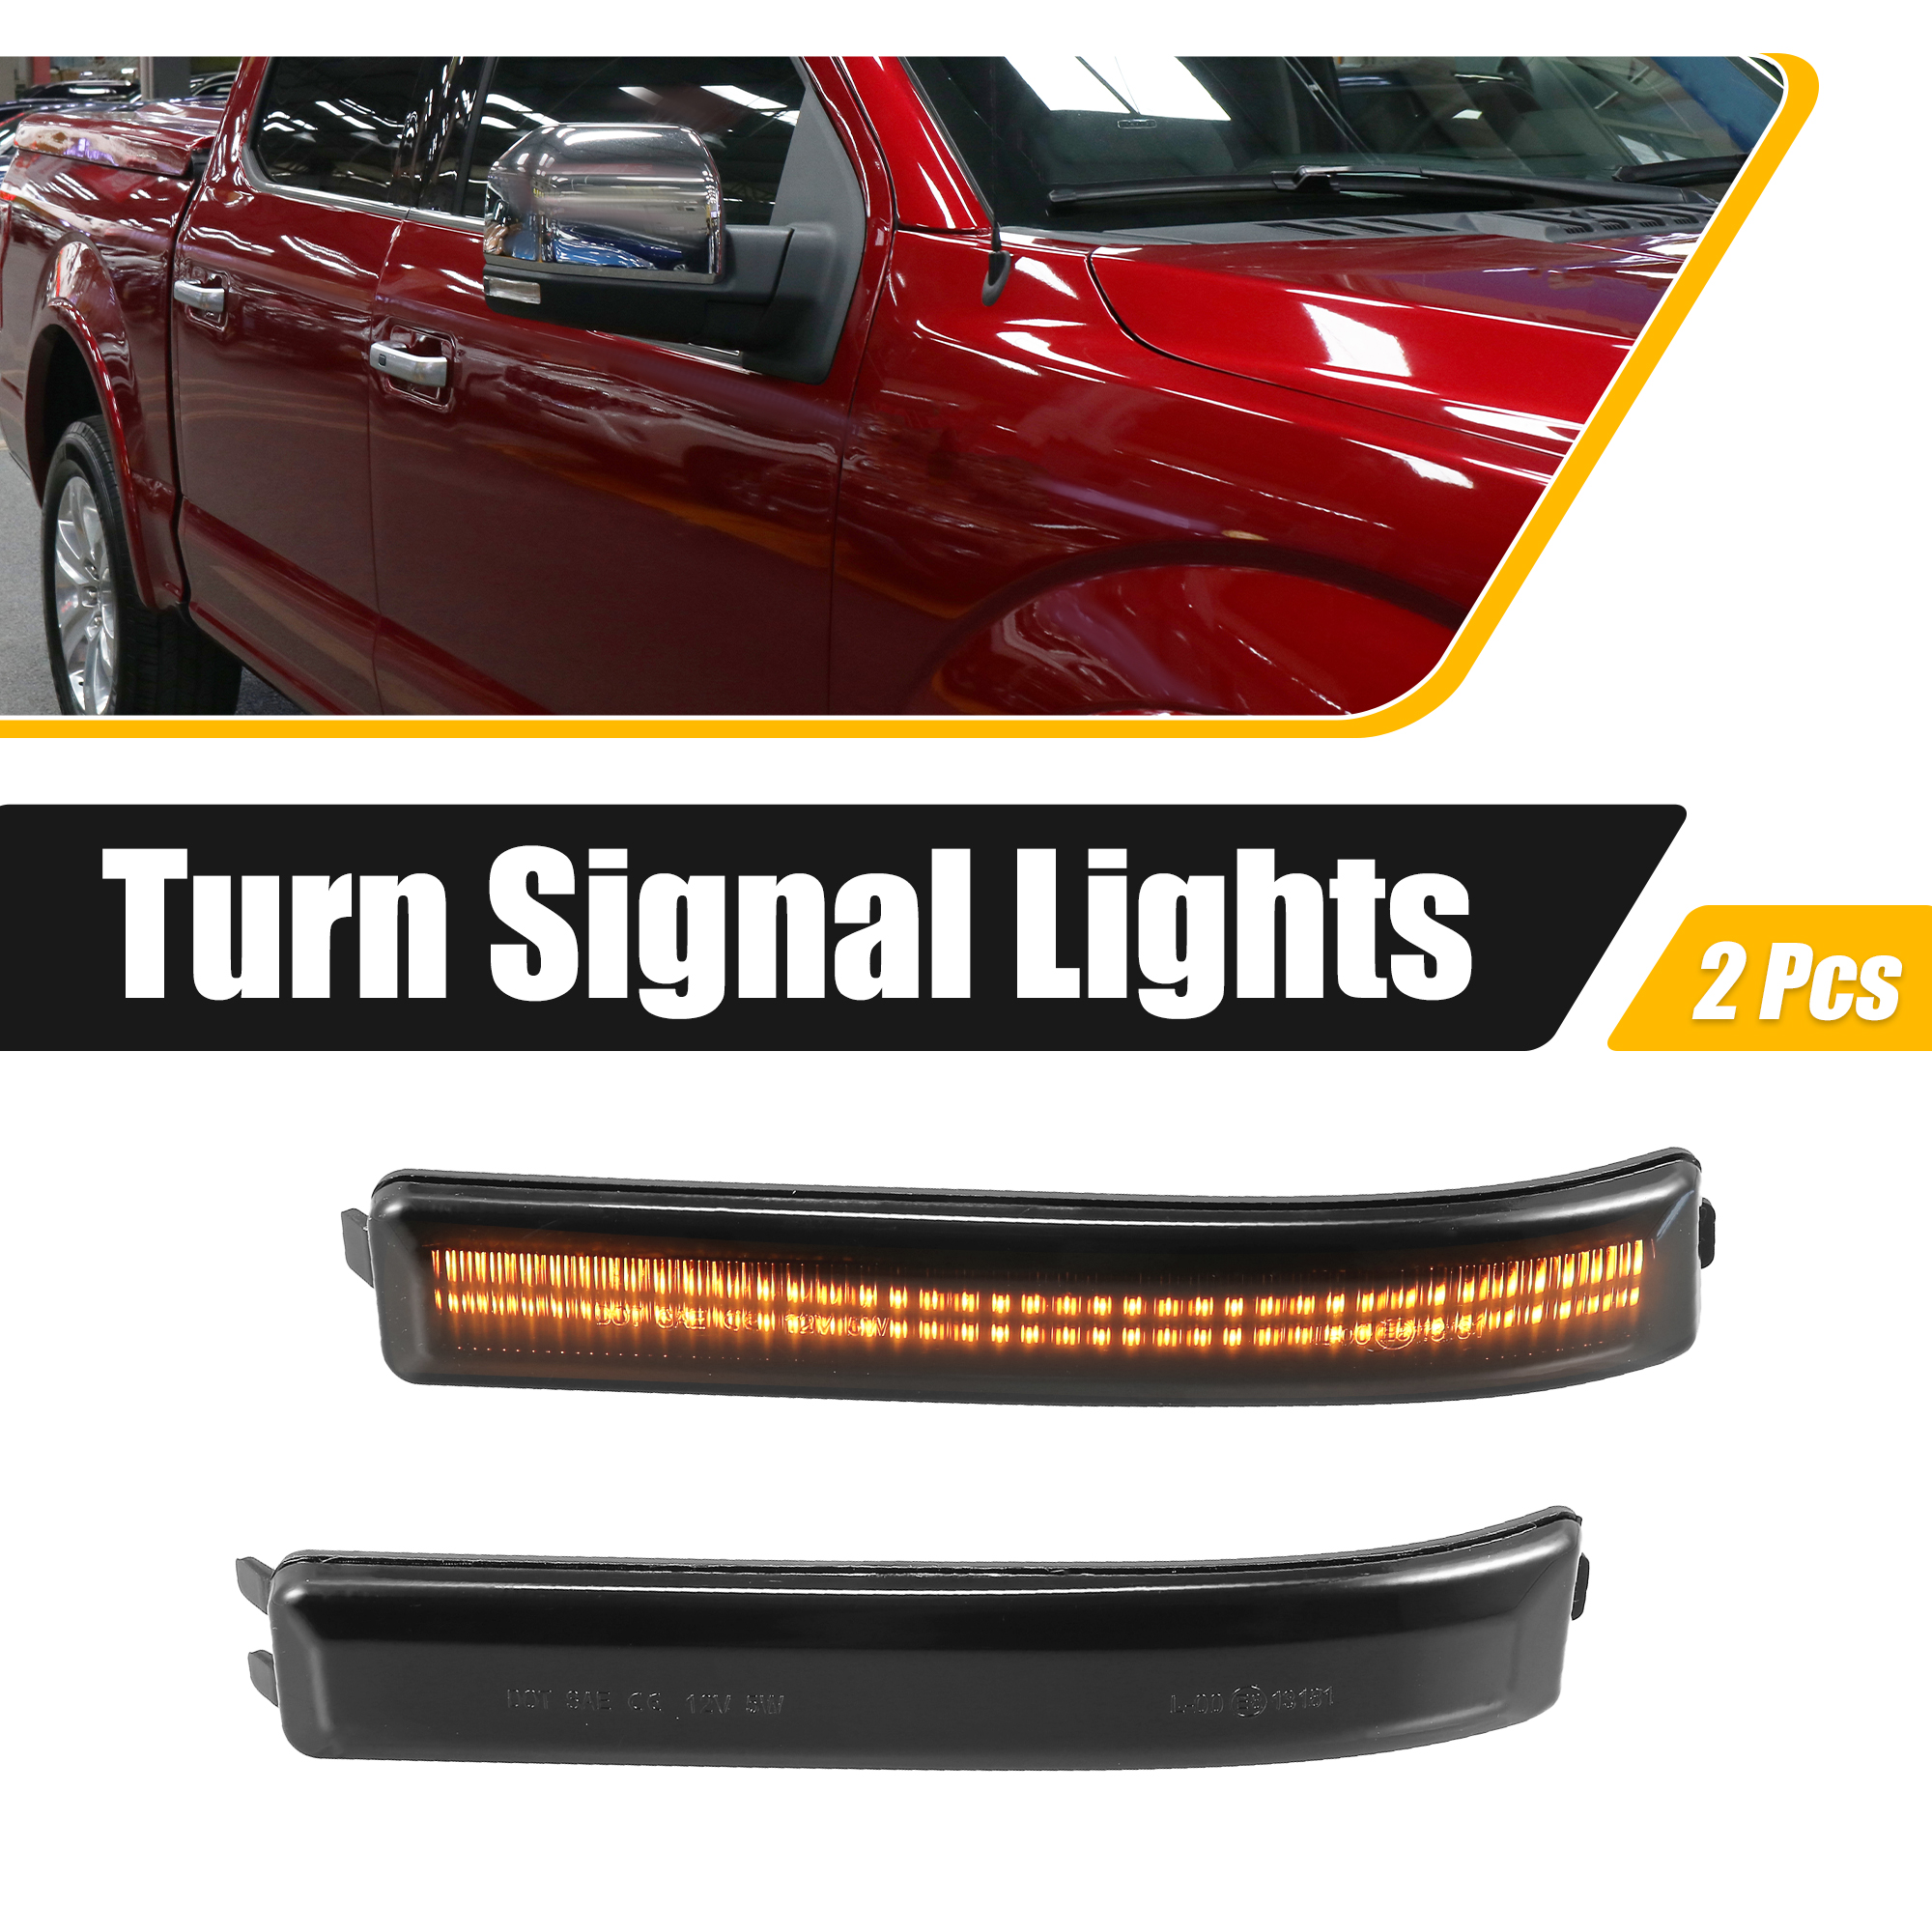 Unique Bargains Turn Signal Light for Ford F-150 2009-2014 9L3Z-17E749-AA 9L3Z-17E748-AA 2pcs